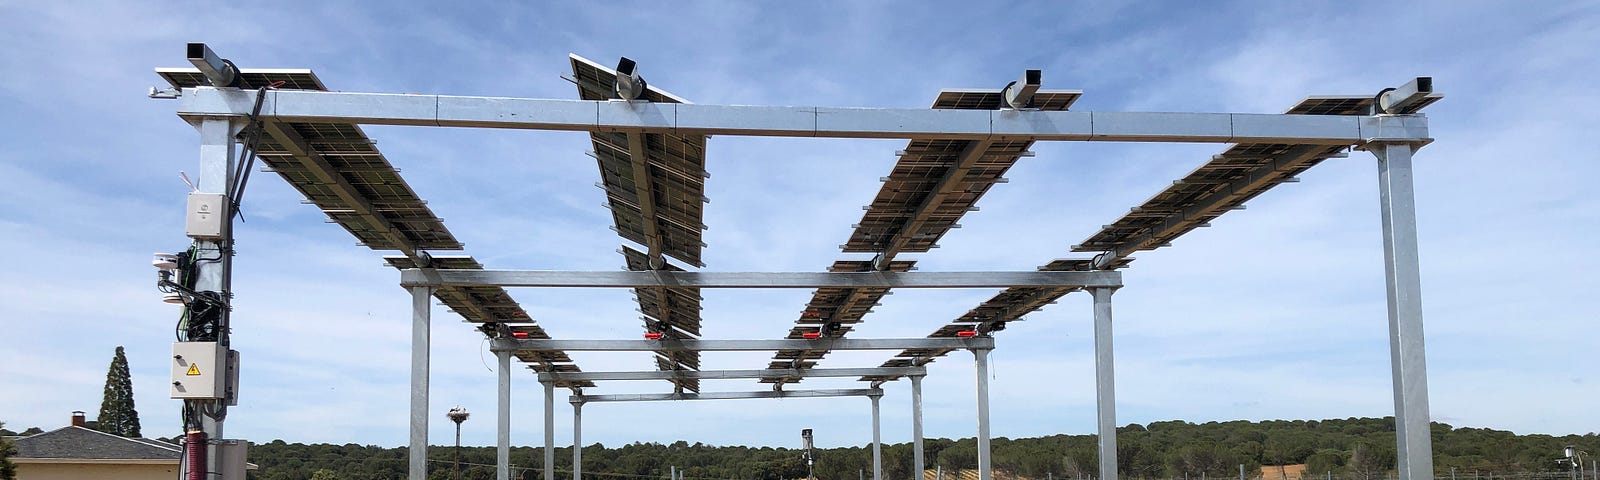 IMAGE: Agrivoltaic installation in a vineyard in the Spanish wine region of Ribera del Duero